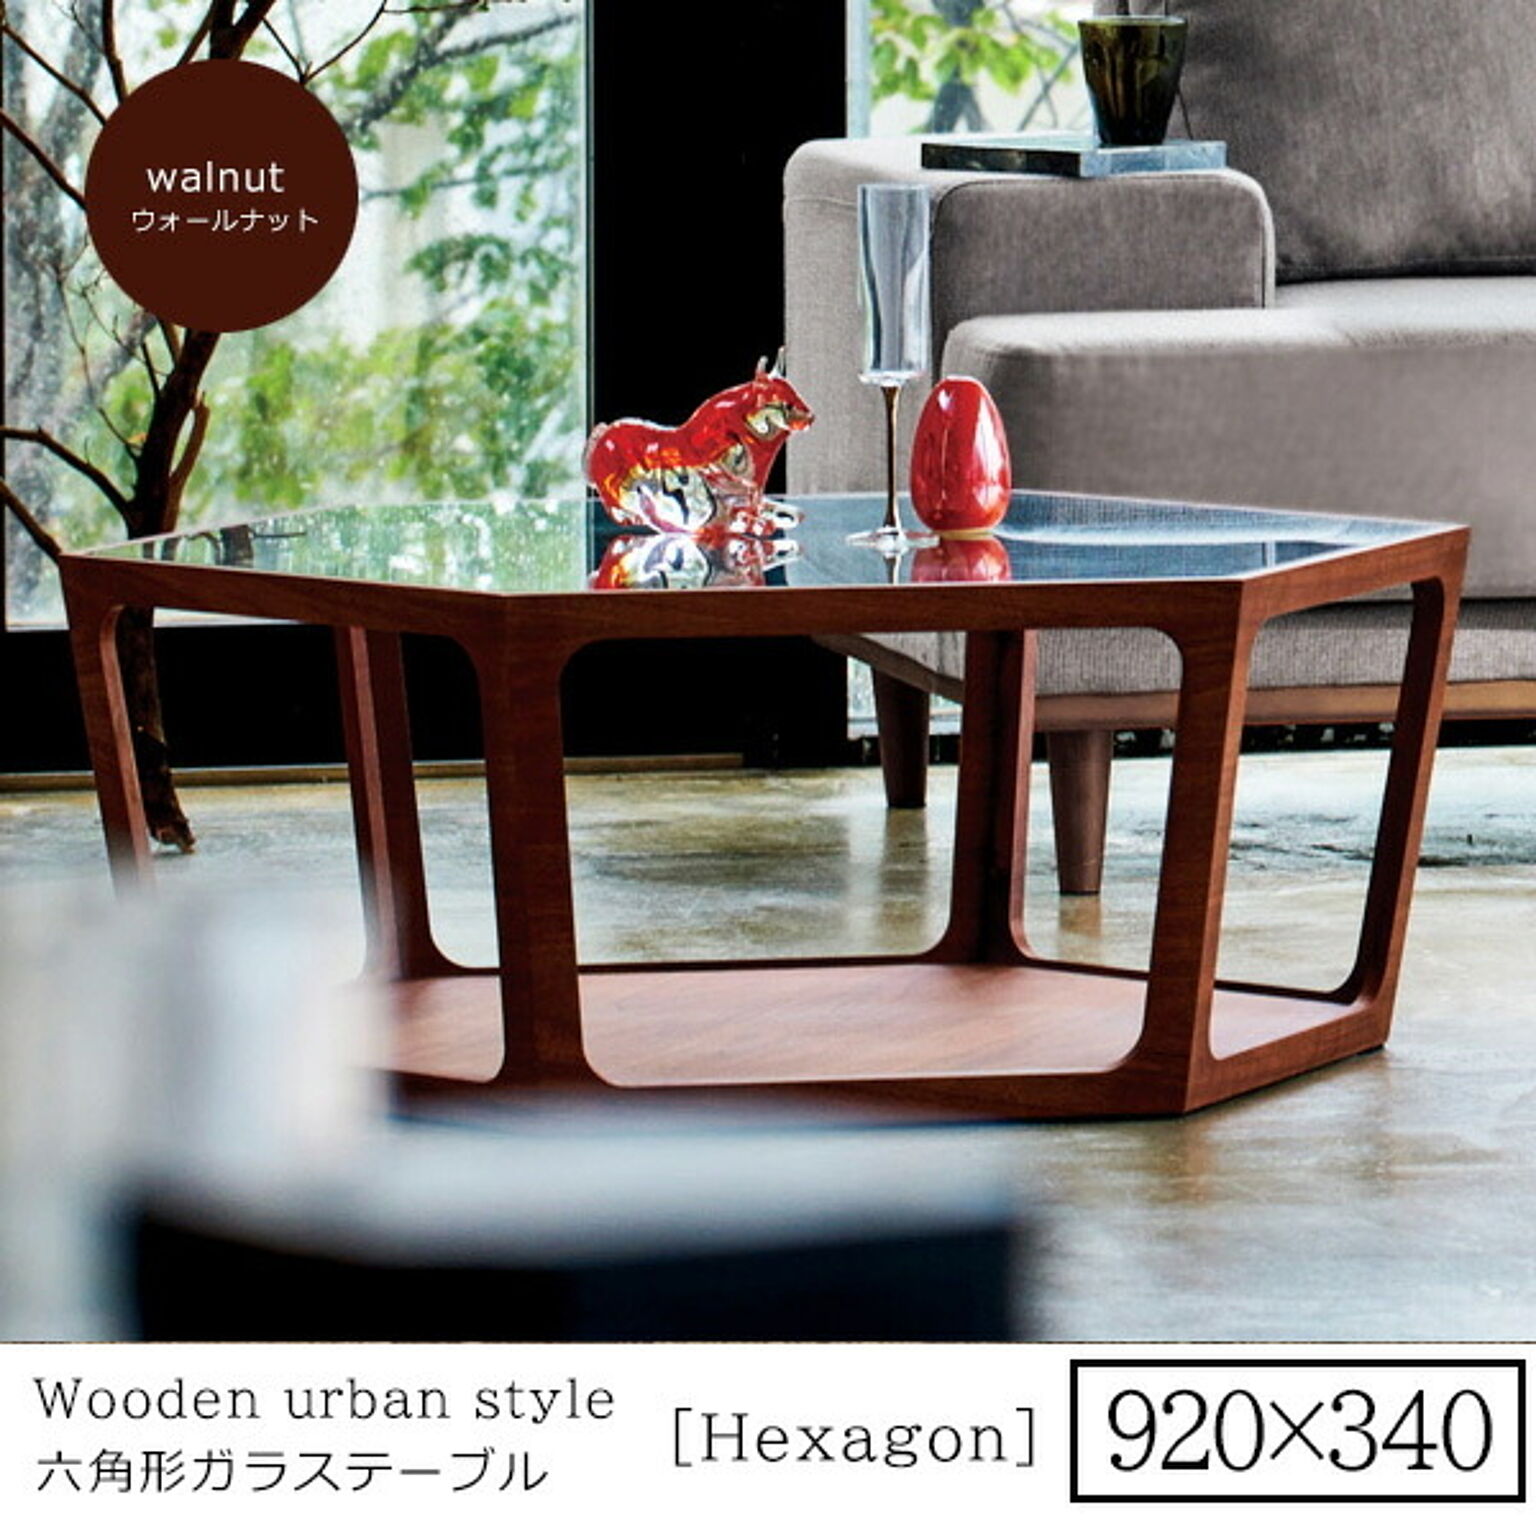 920x340 ： アーバン リビング 強化ガラステーブル【Hexagon】 ウォールナット (アーバン) センターテーブル コーヒーテーブル リビング 